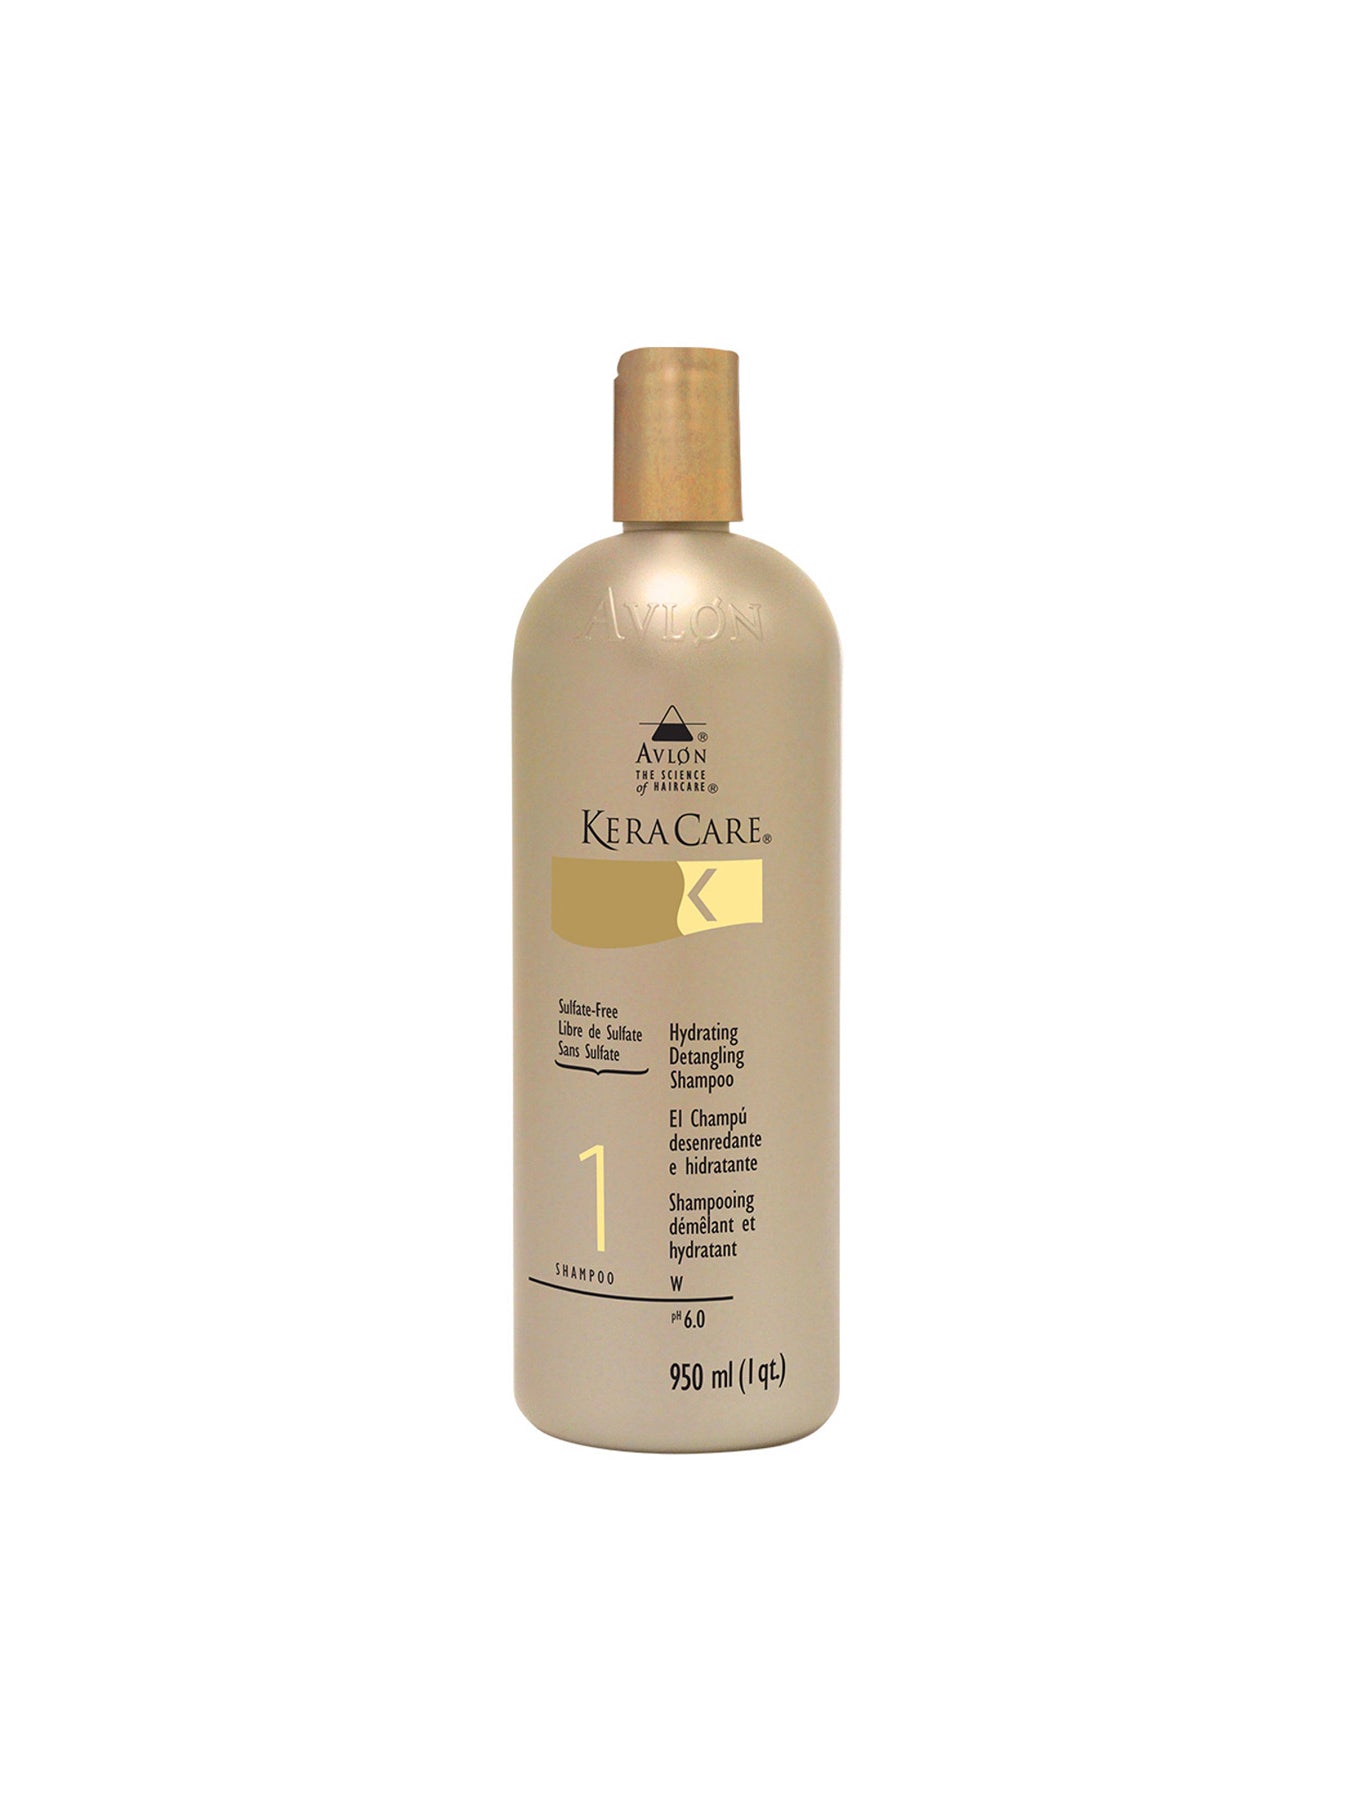 KeraCare Sulfate Free Hydrating Detangler Shampoo